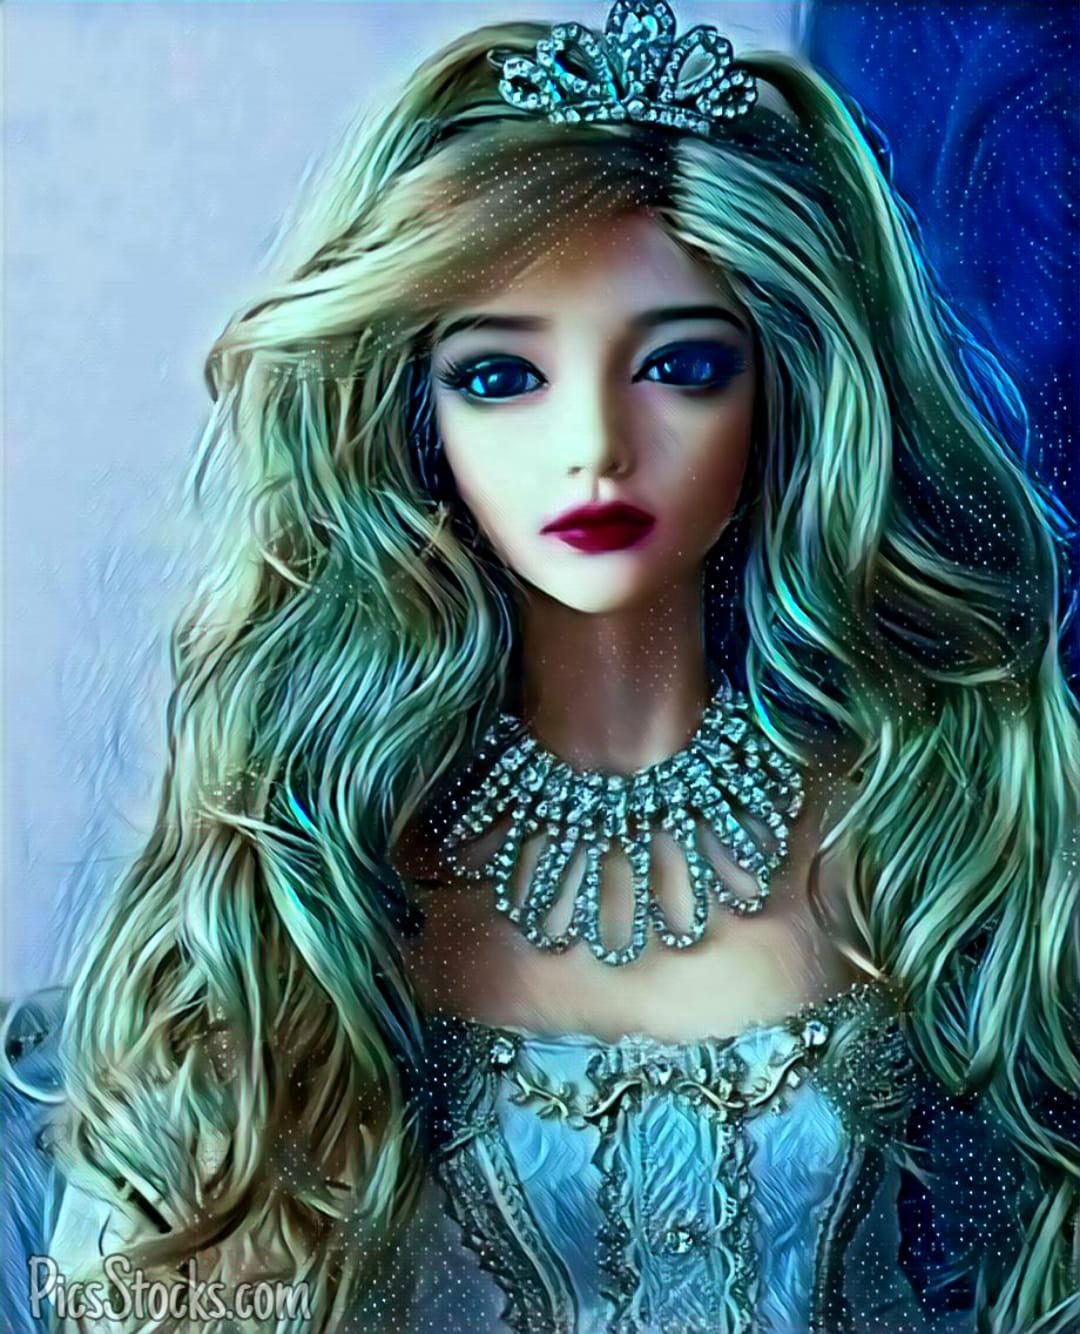 Barbie Doll Image Free Download , barbie Doll Wallpaper